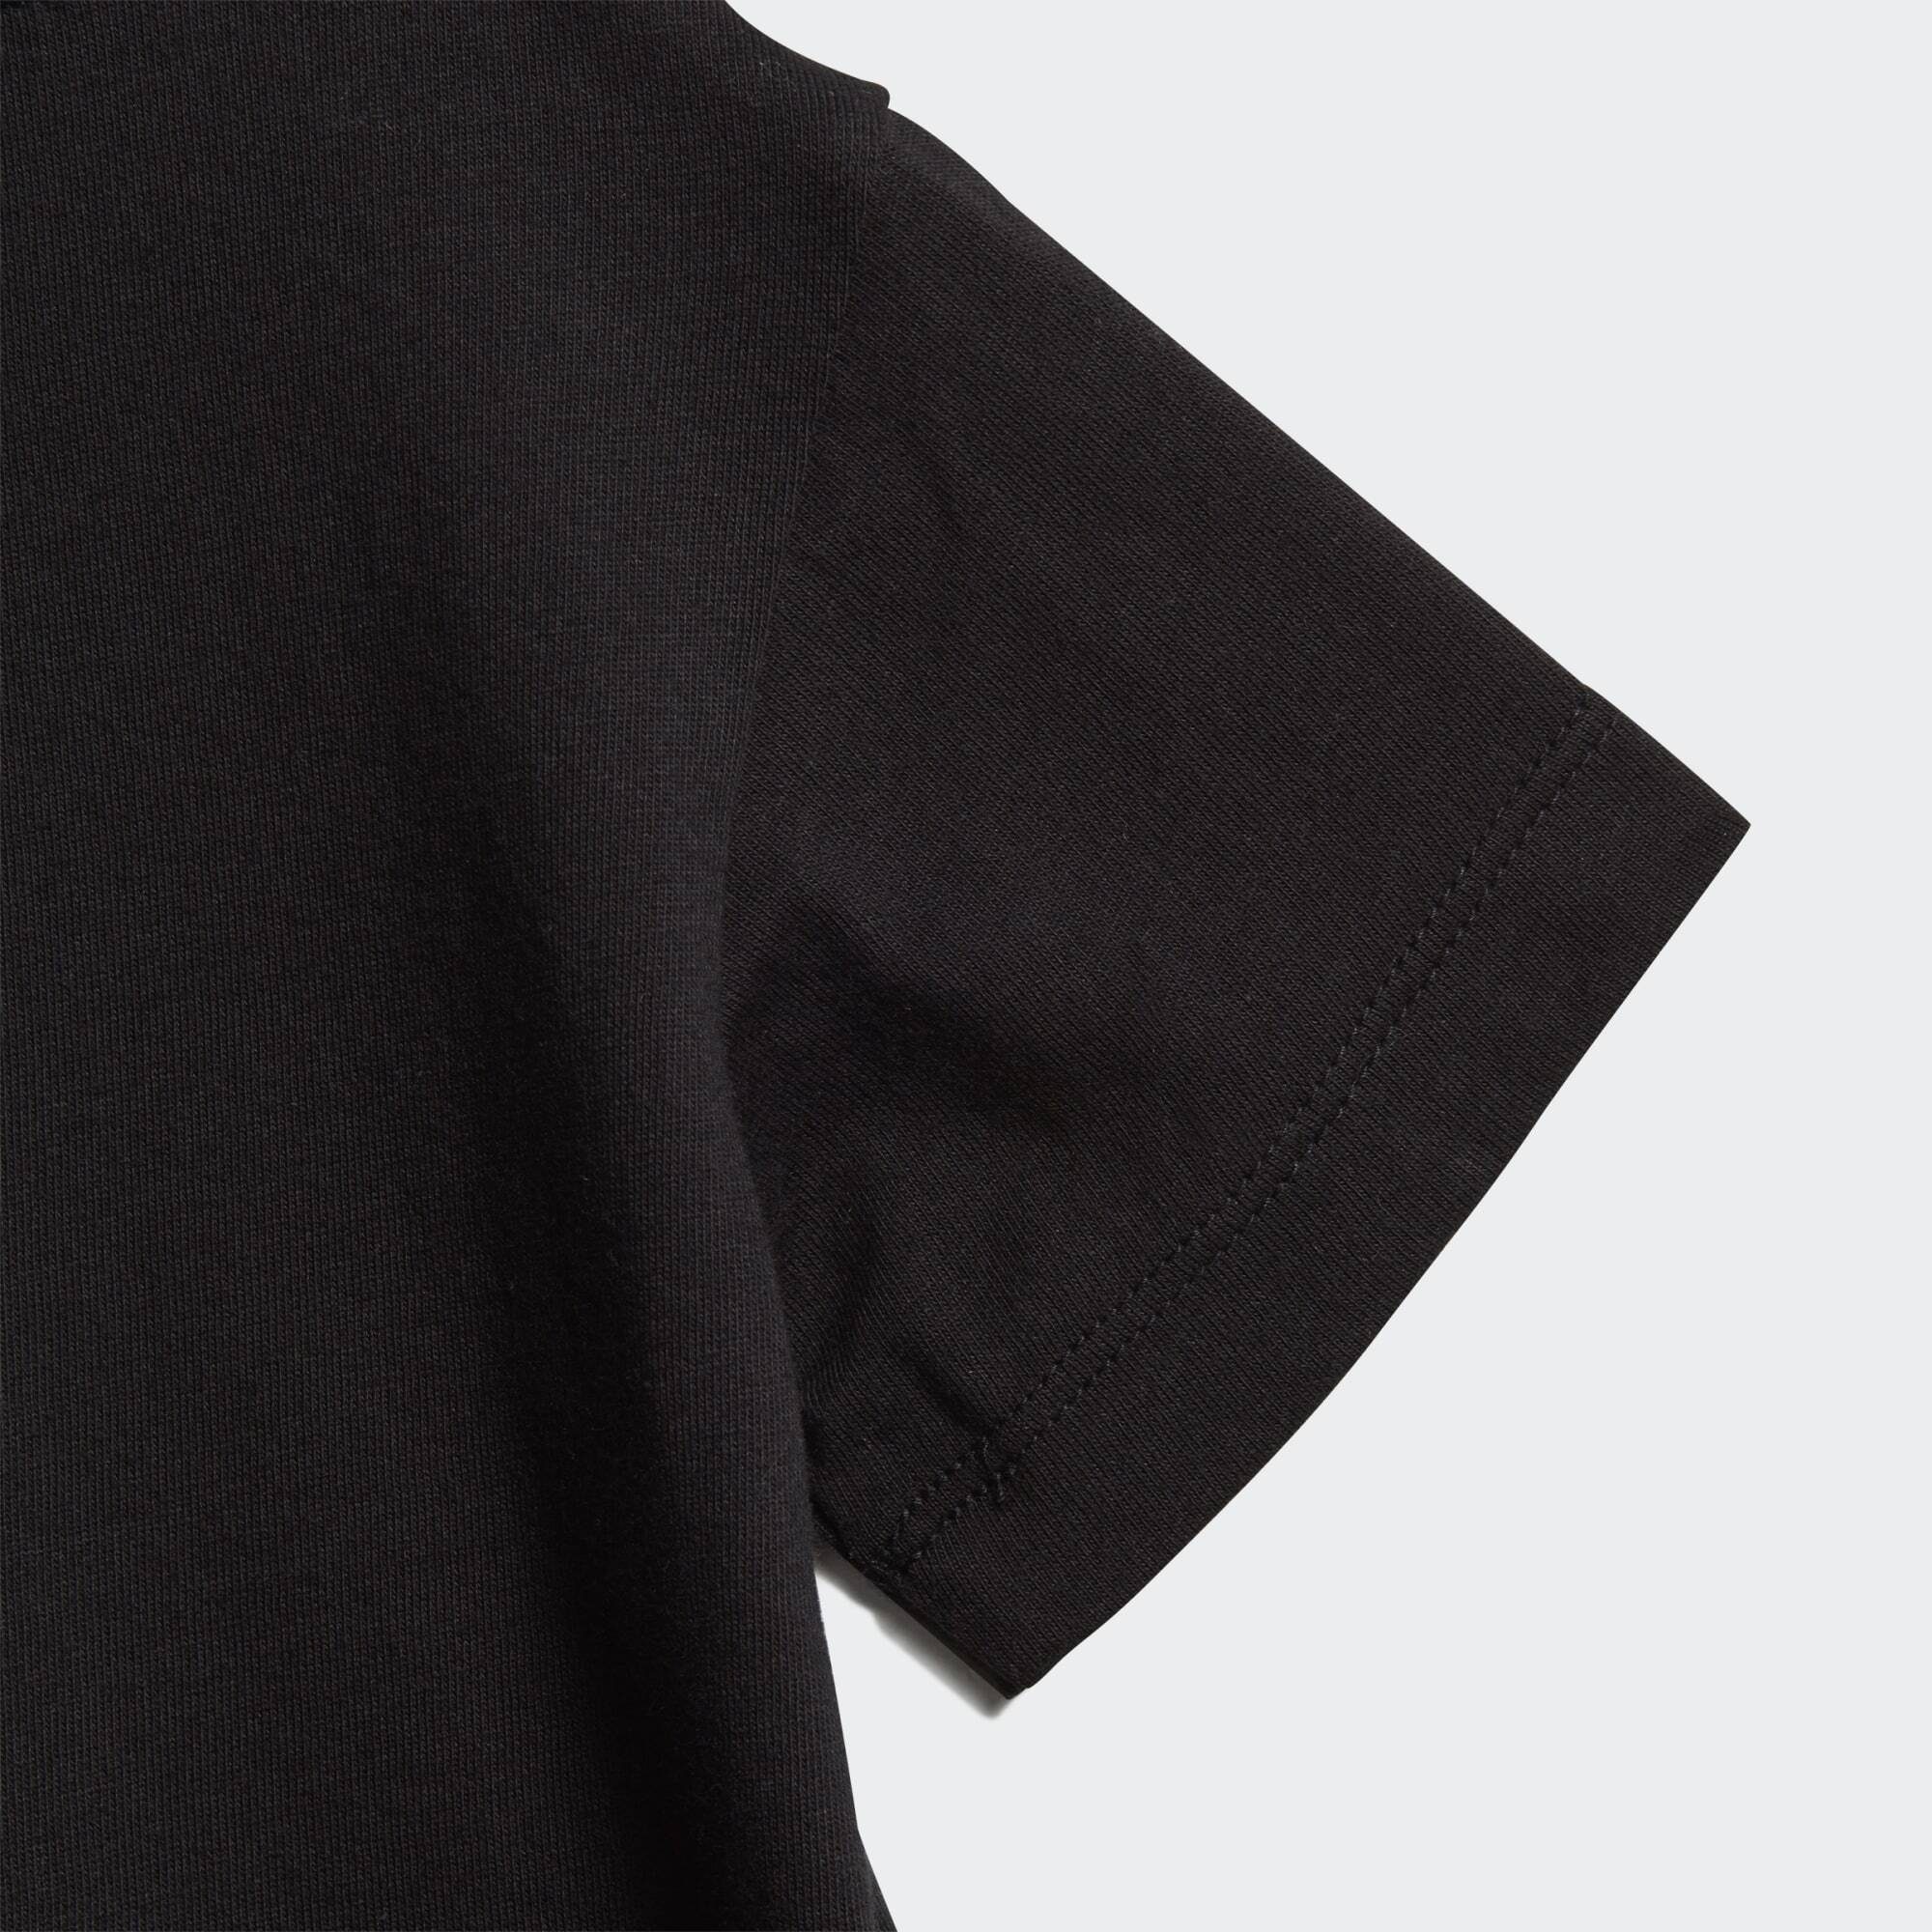 TREFOIL Originals Black White / T-SHIRT adidas T-Shirt